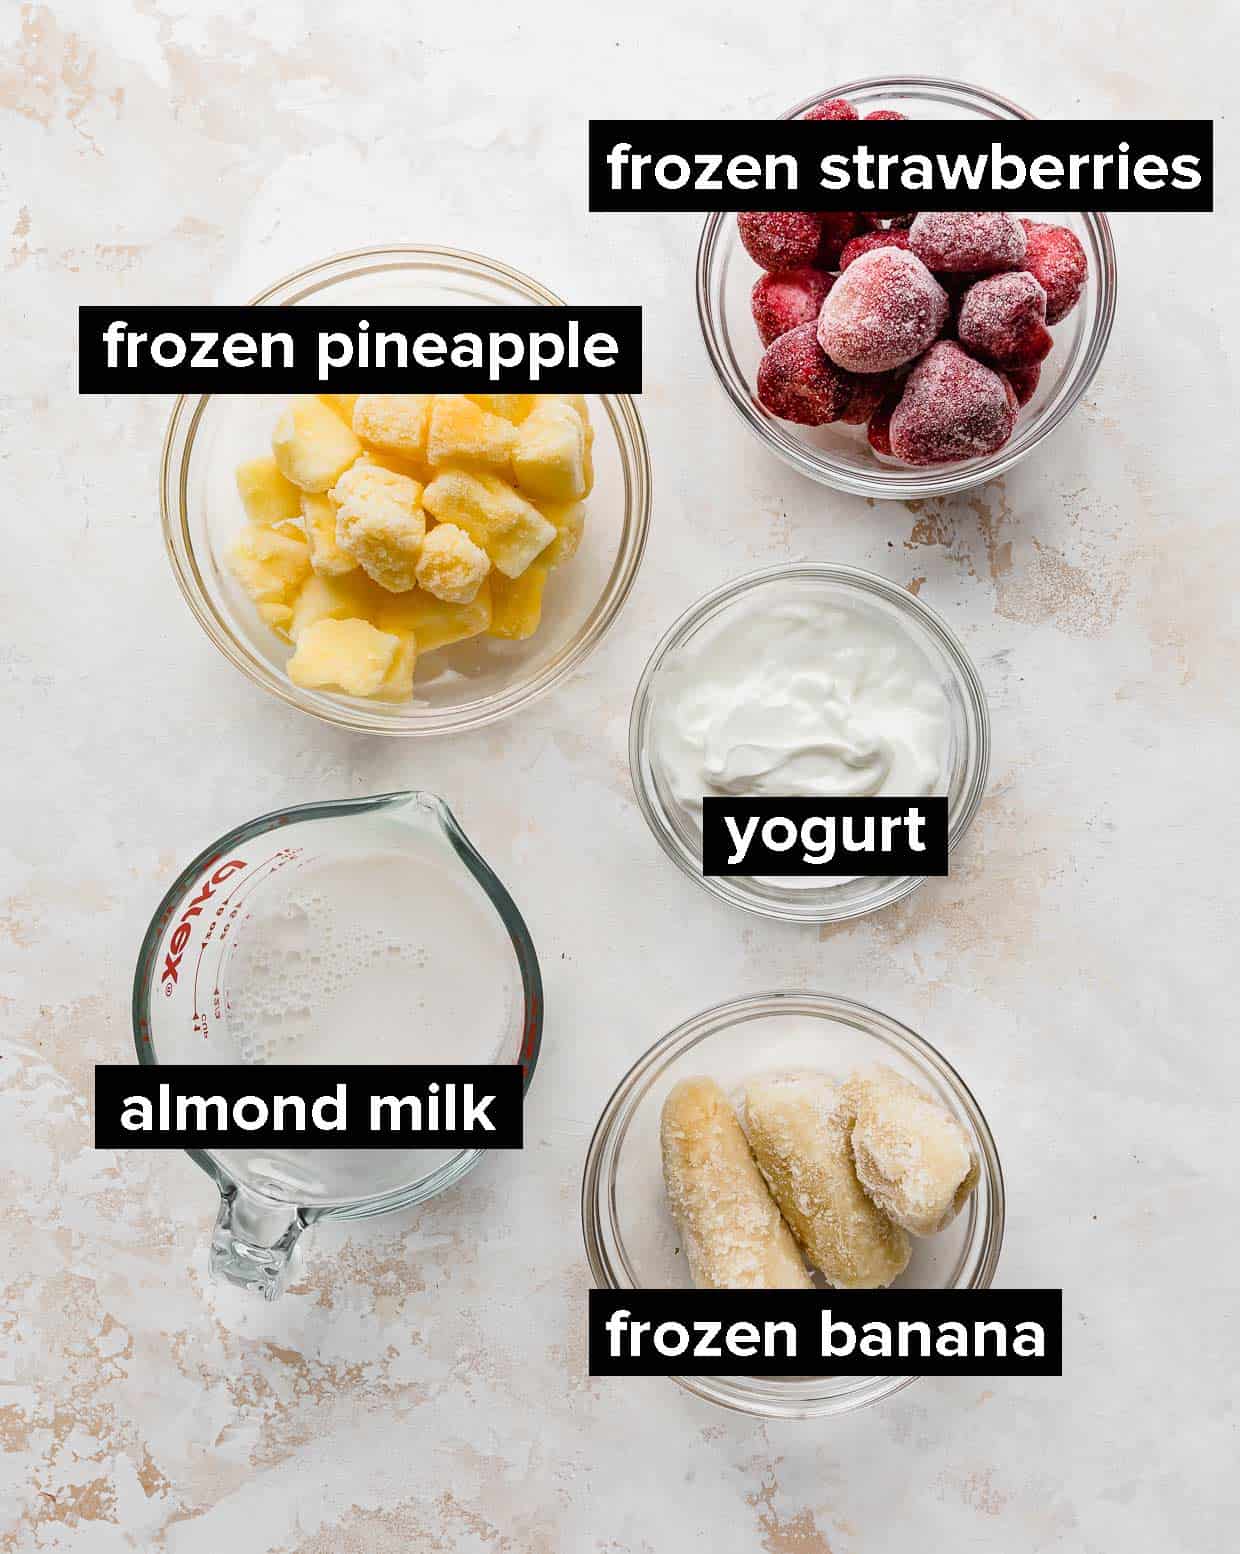 Ingredients used to make strawberry pineapple smoothie; milk, banana, strawberries, yogurt, and pineapple.